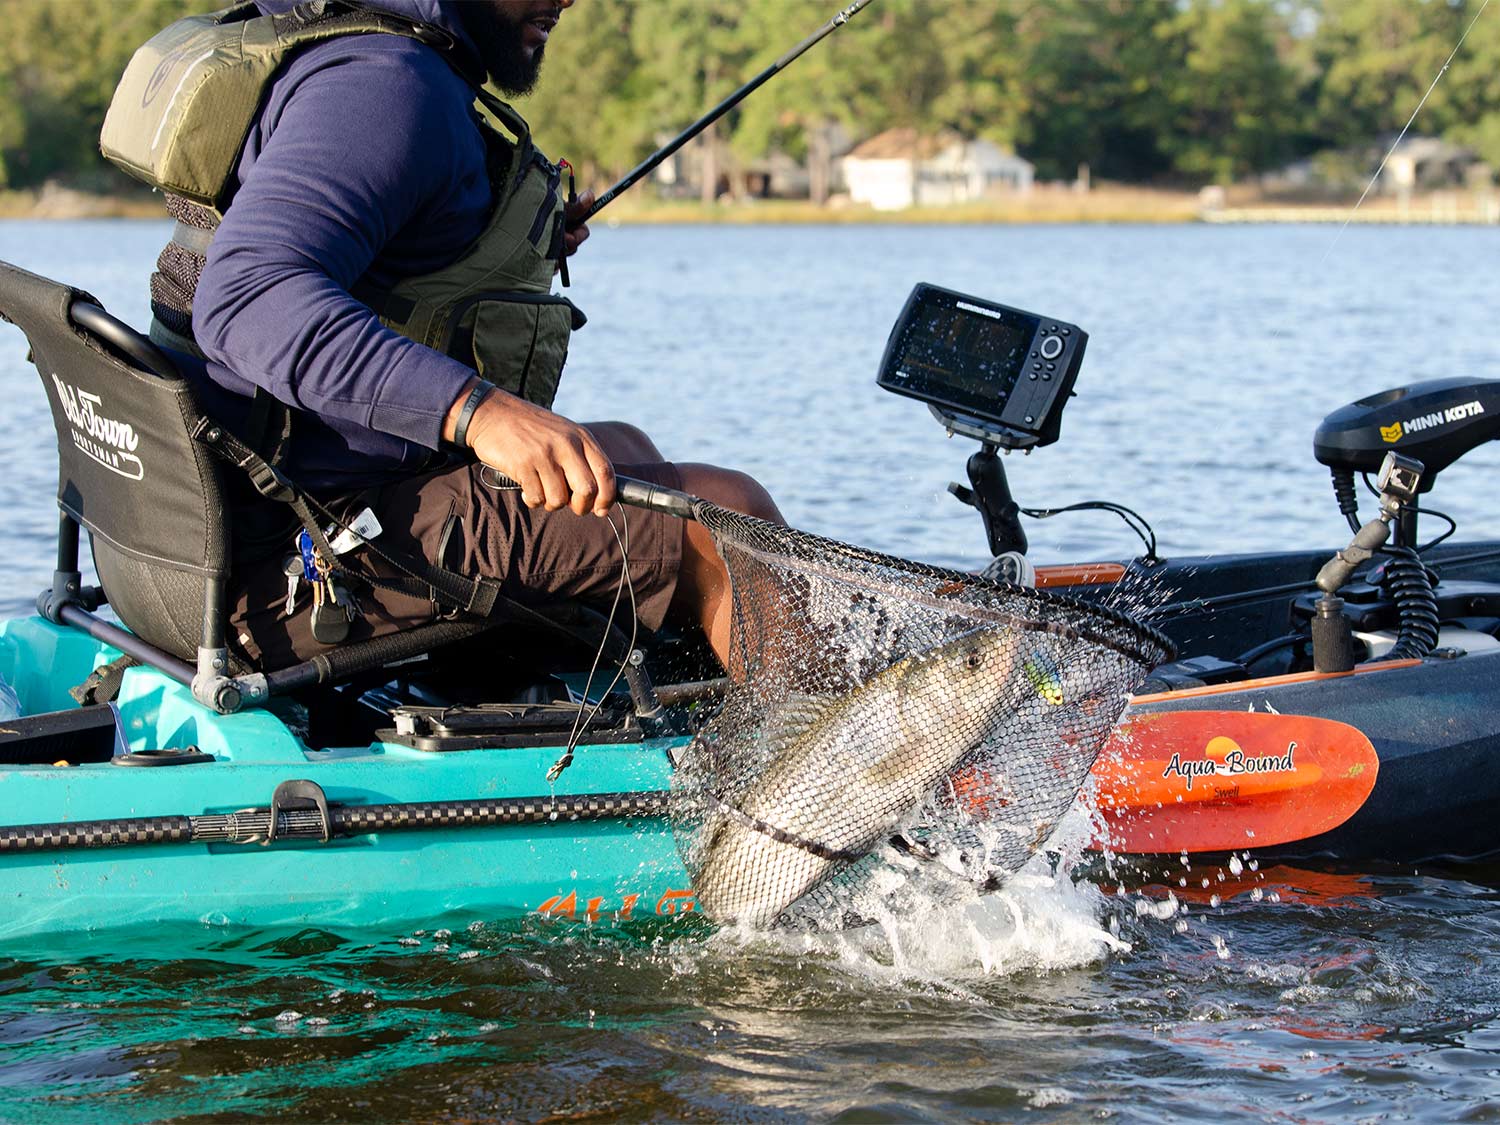 An angler pulls a fish into a kayak using a net.